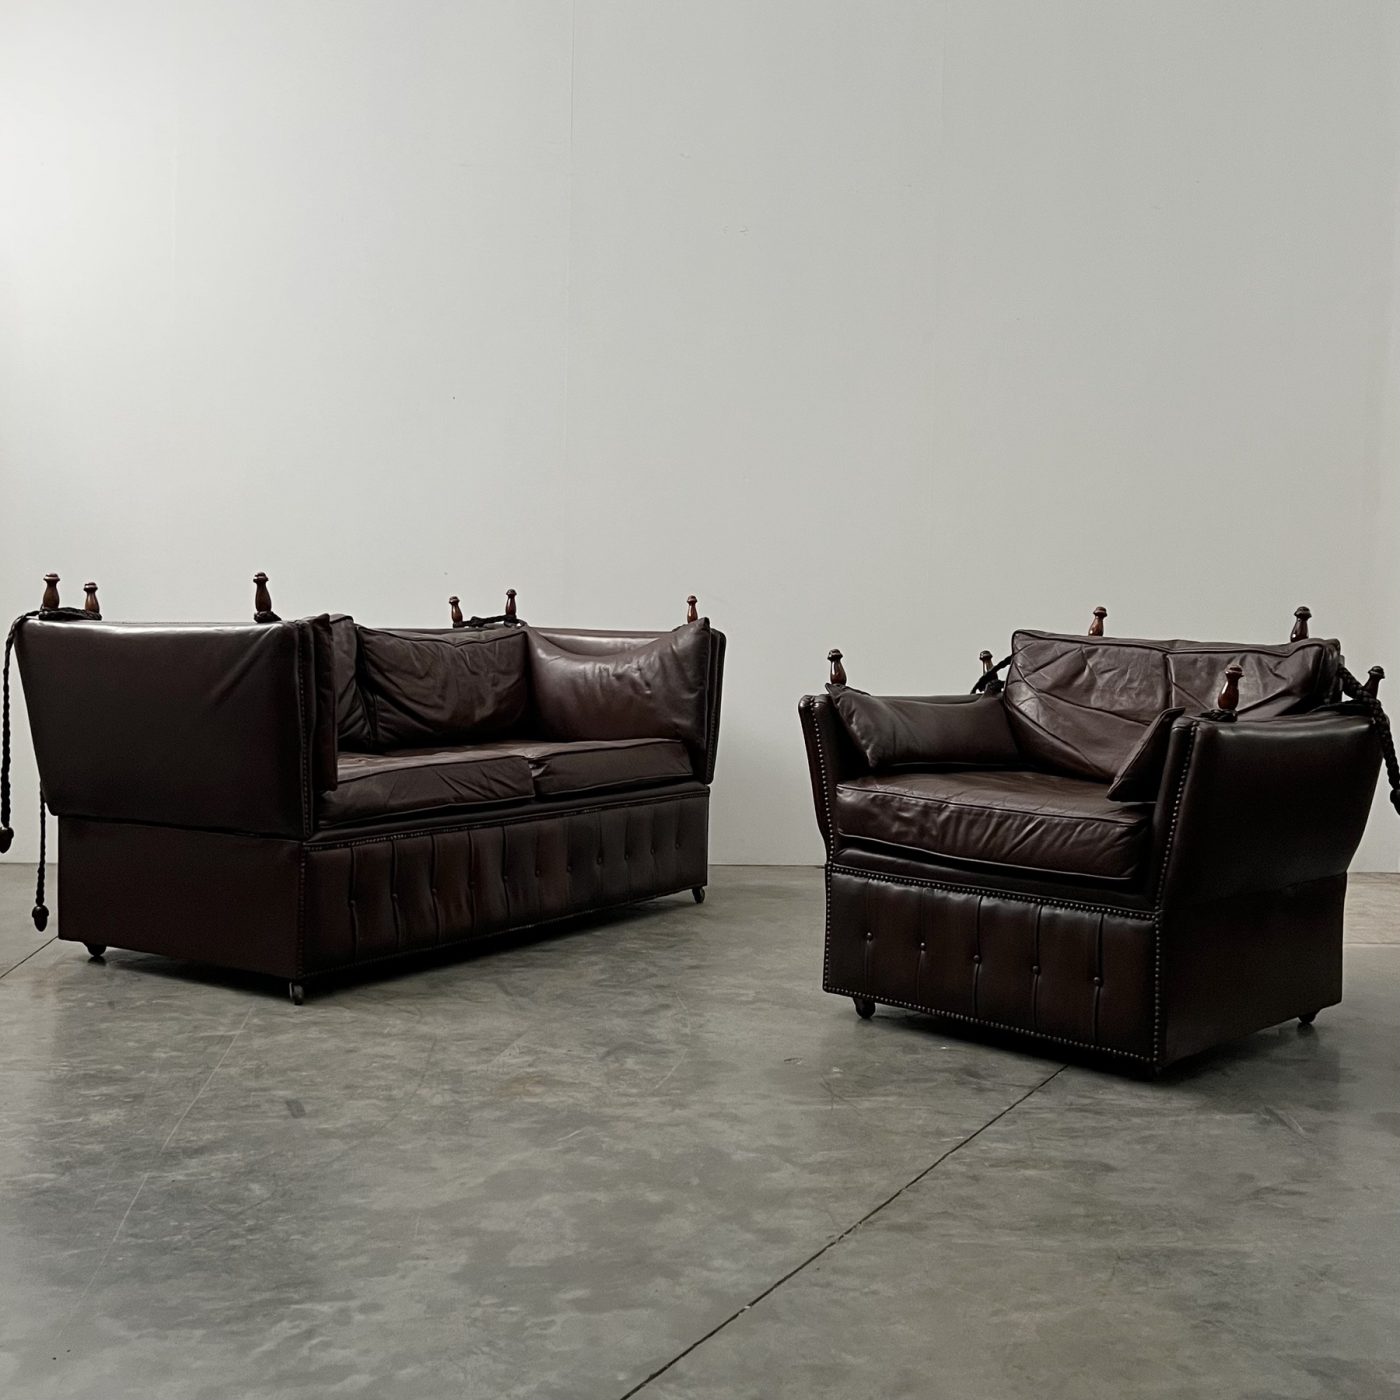 objet-vagabond-leather-set0005